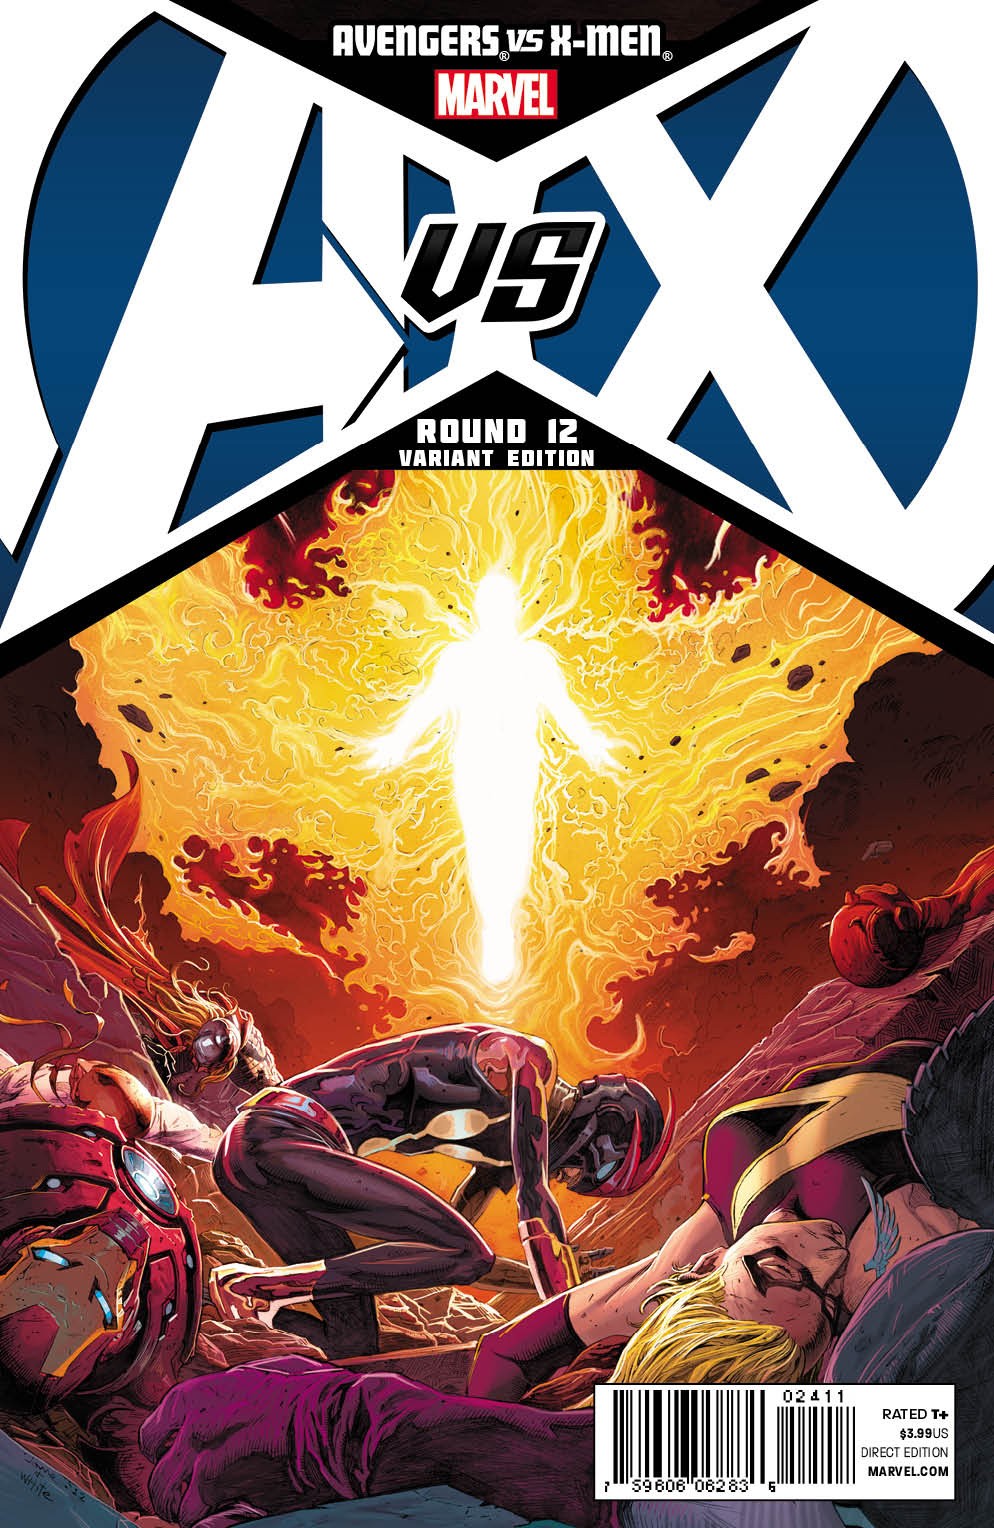 Avengers vs. X-Men Issue 12 finale